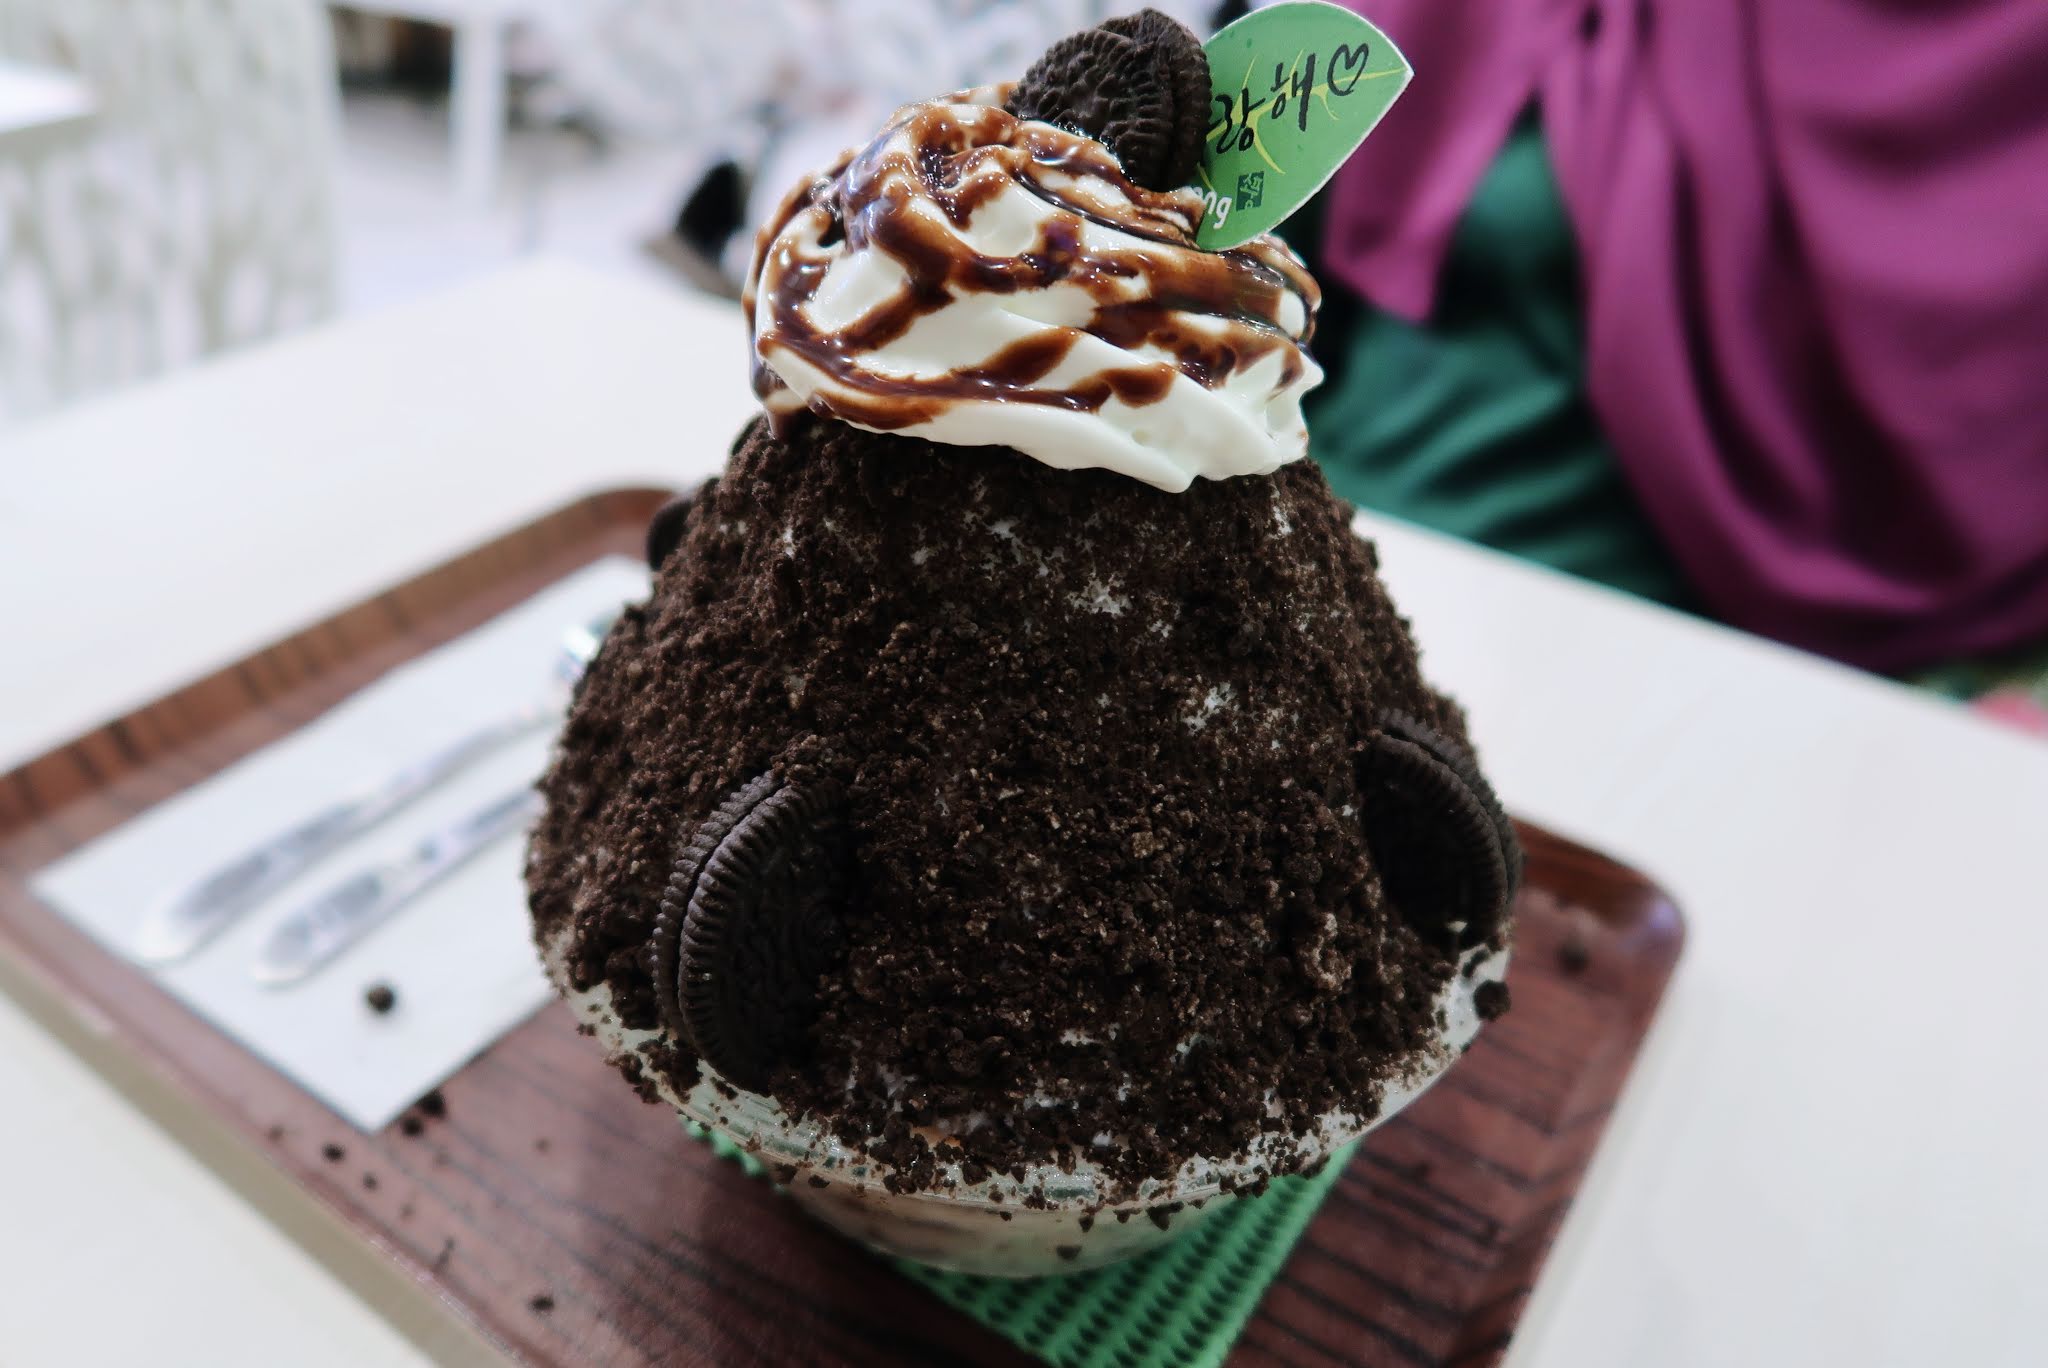 Dessert Set - Mix Hotteok & Bingsu - Oreo Bingsu @ Sopoong, Central i-City